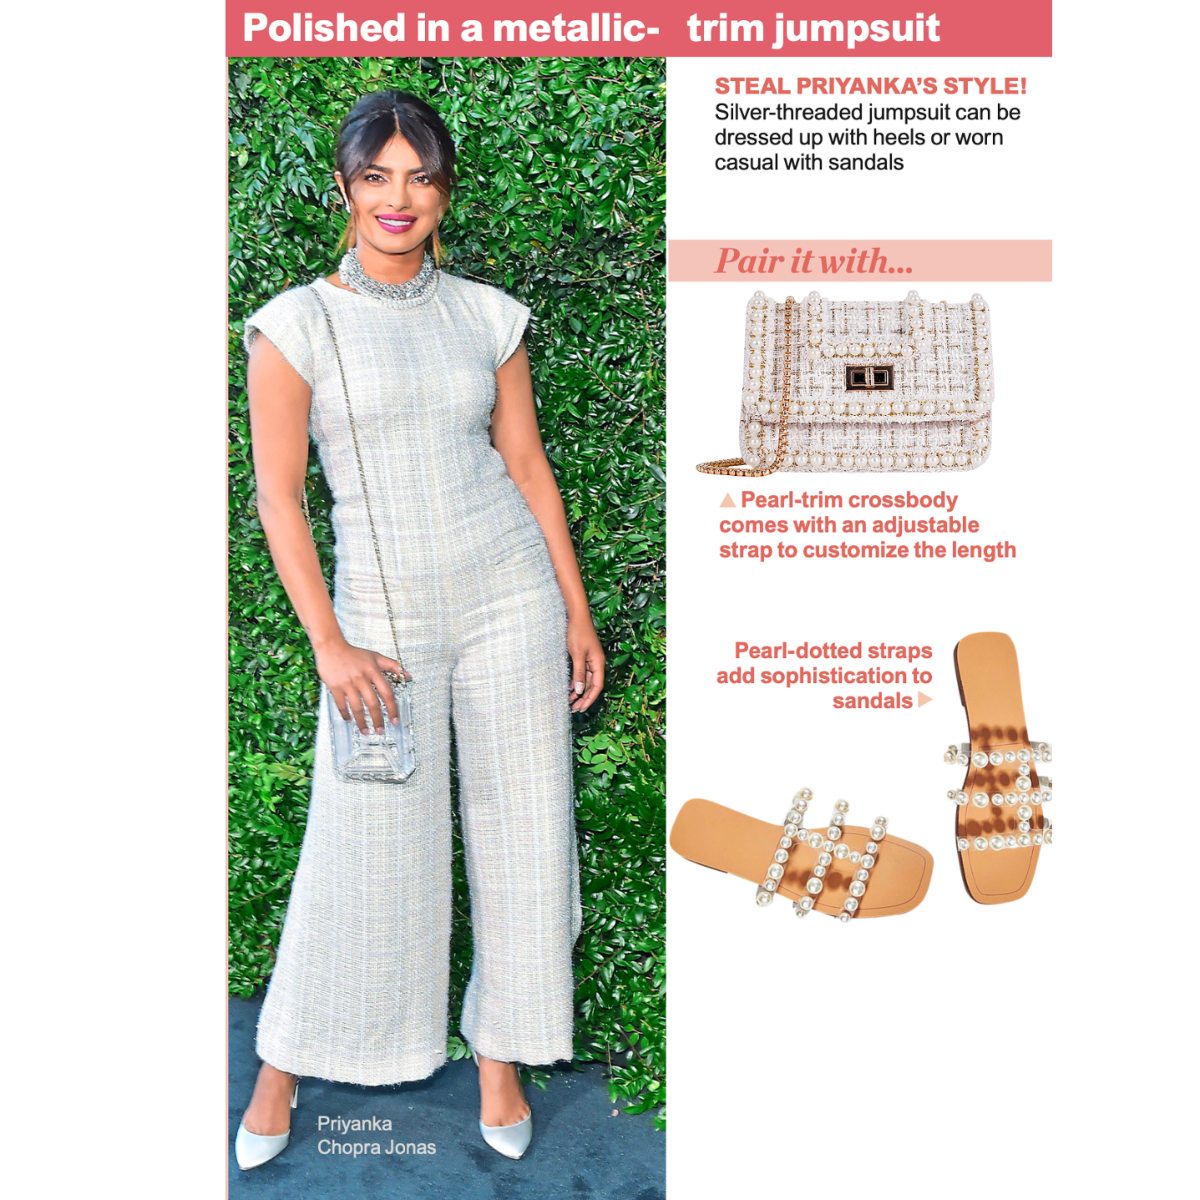 Priyanka Chopra Jonas and fashion items to match her outfit